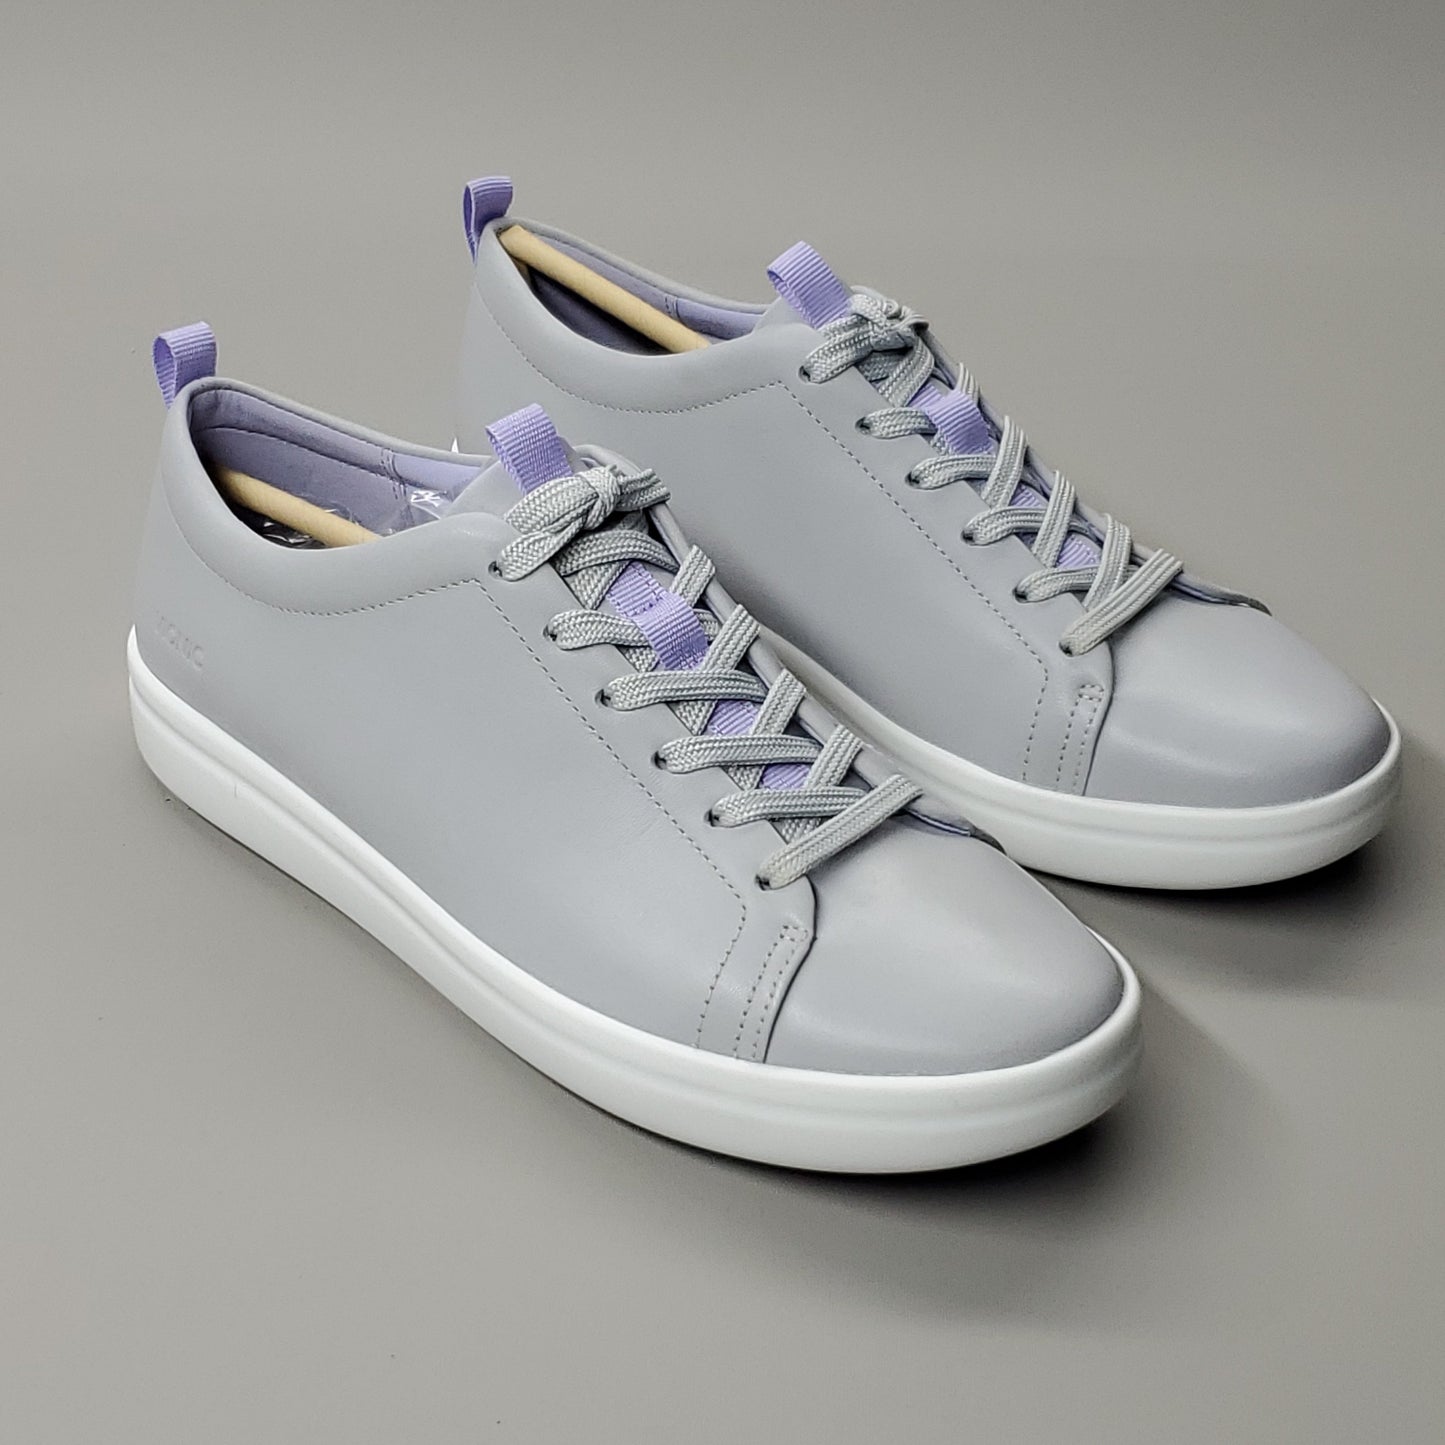 VIONIC Paisley Vapor Leather Shoe Women's Sz 9.5 Grey (New)